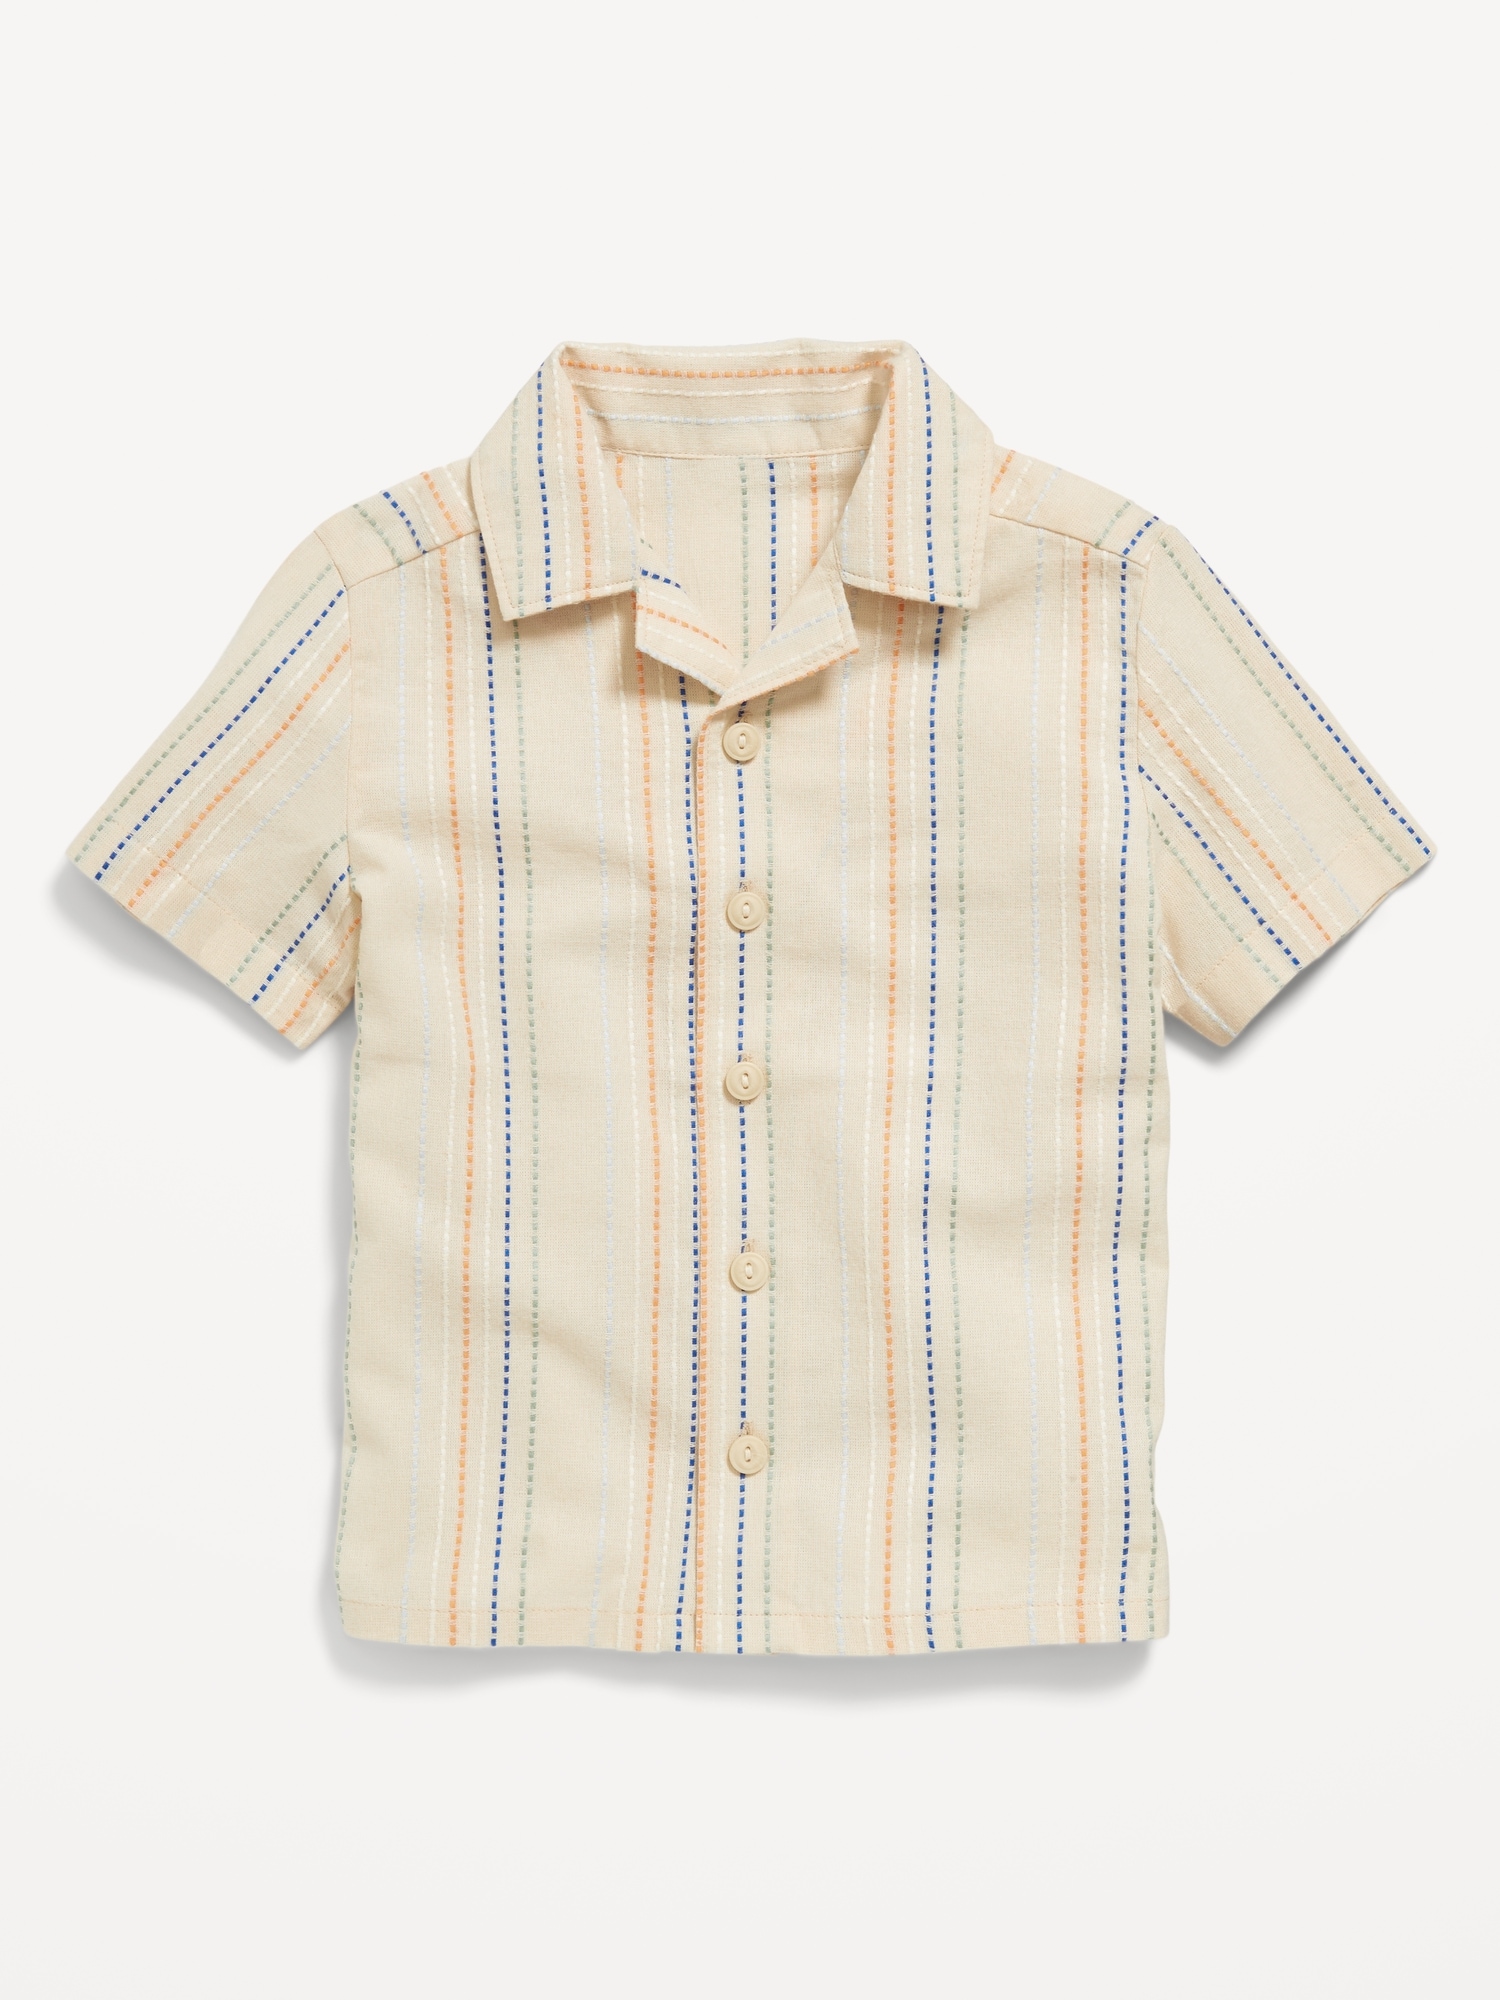 Textured Striped Dobby Shirt for Toddler Boys